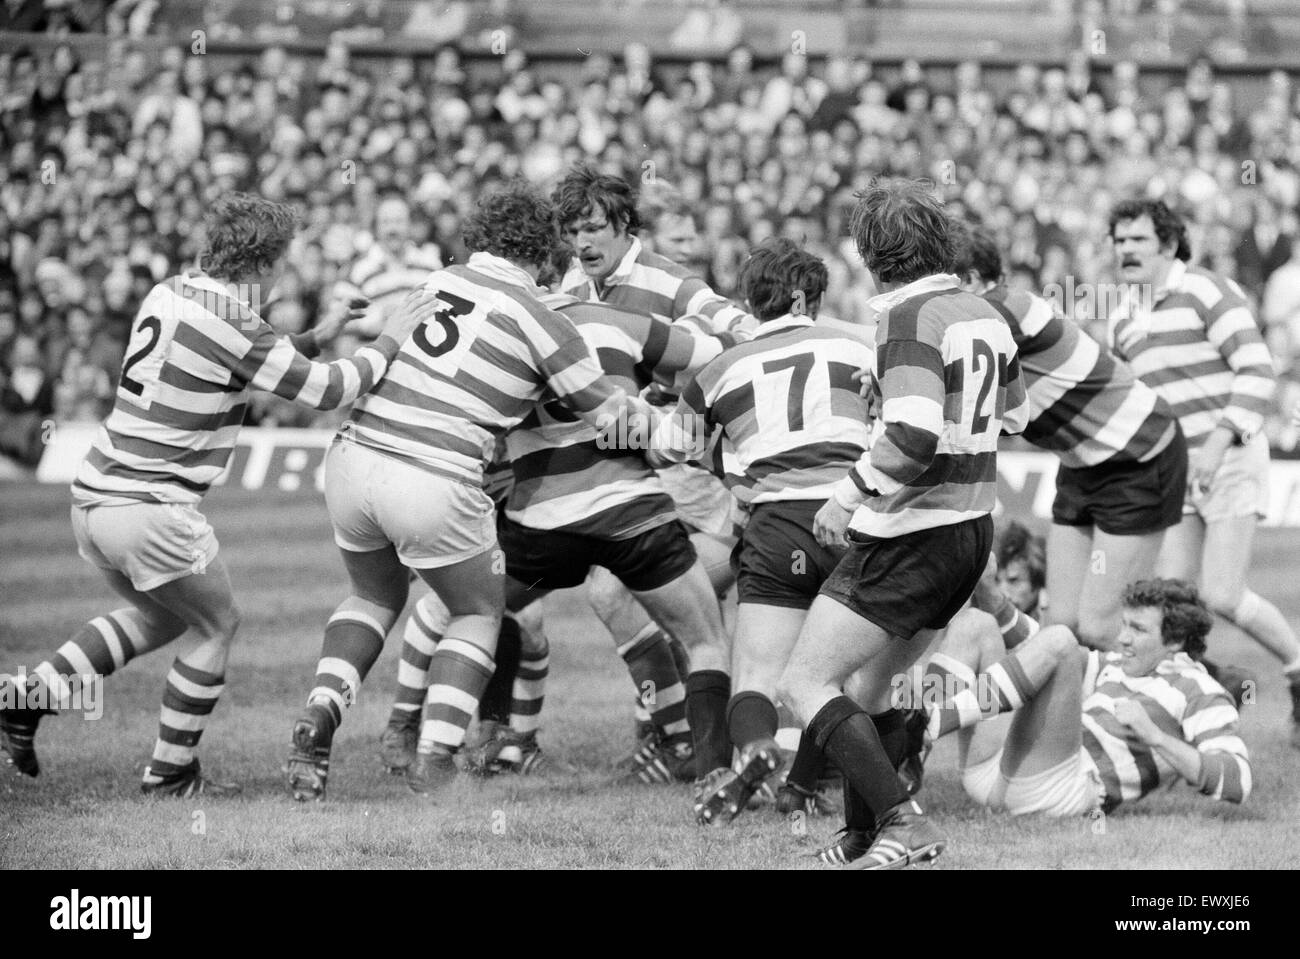 Southampton 27-11 Waterloo, Rugby, John Player Cup match finale a Twickenham Stadium, sabato 10 aprile 1977. Foto Stock